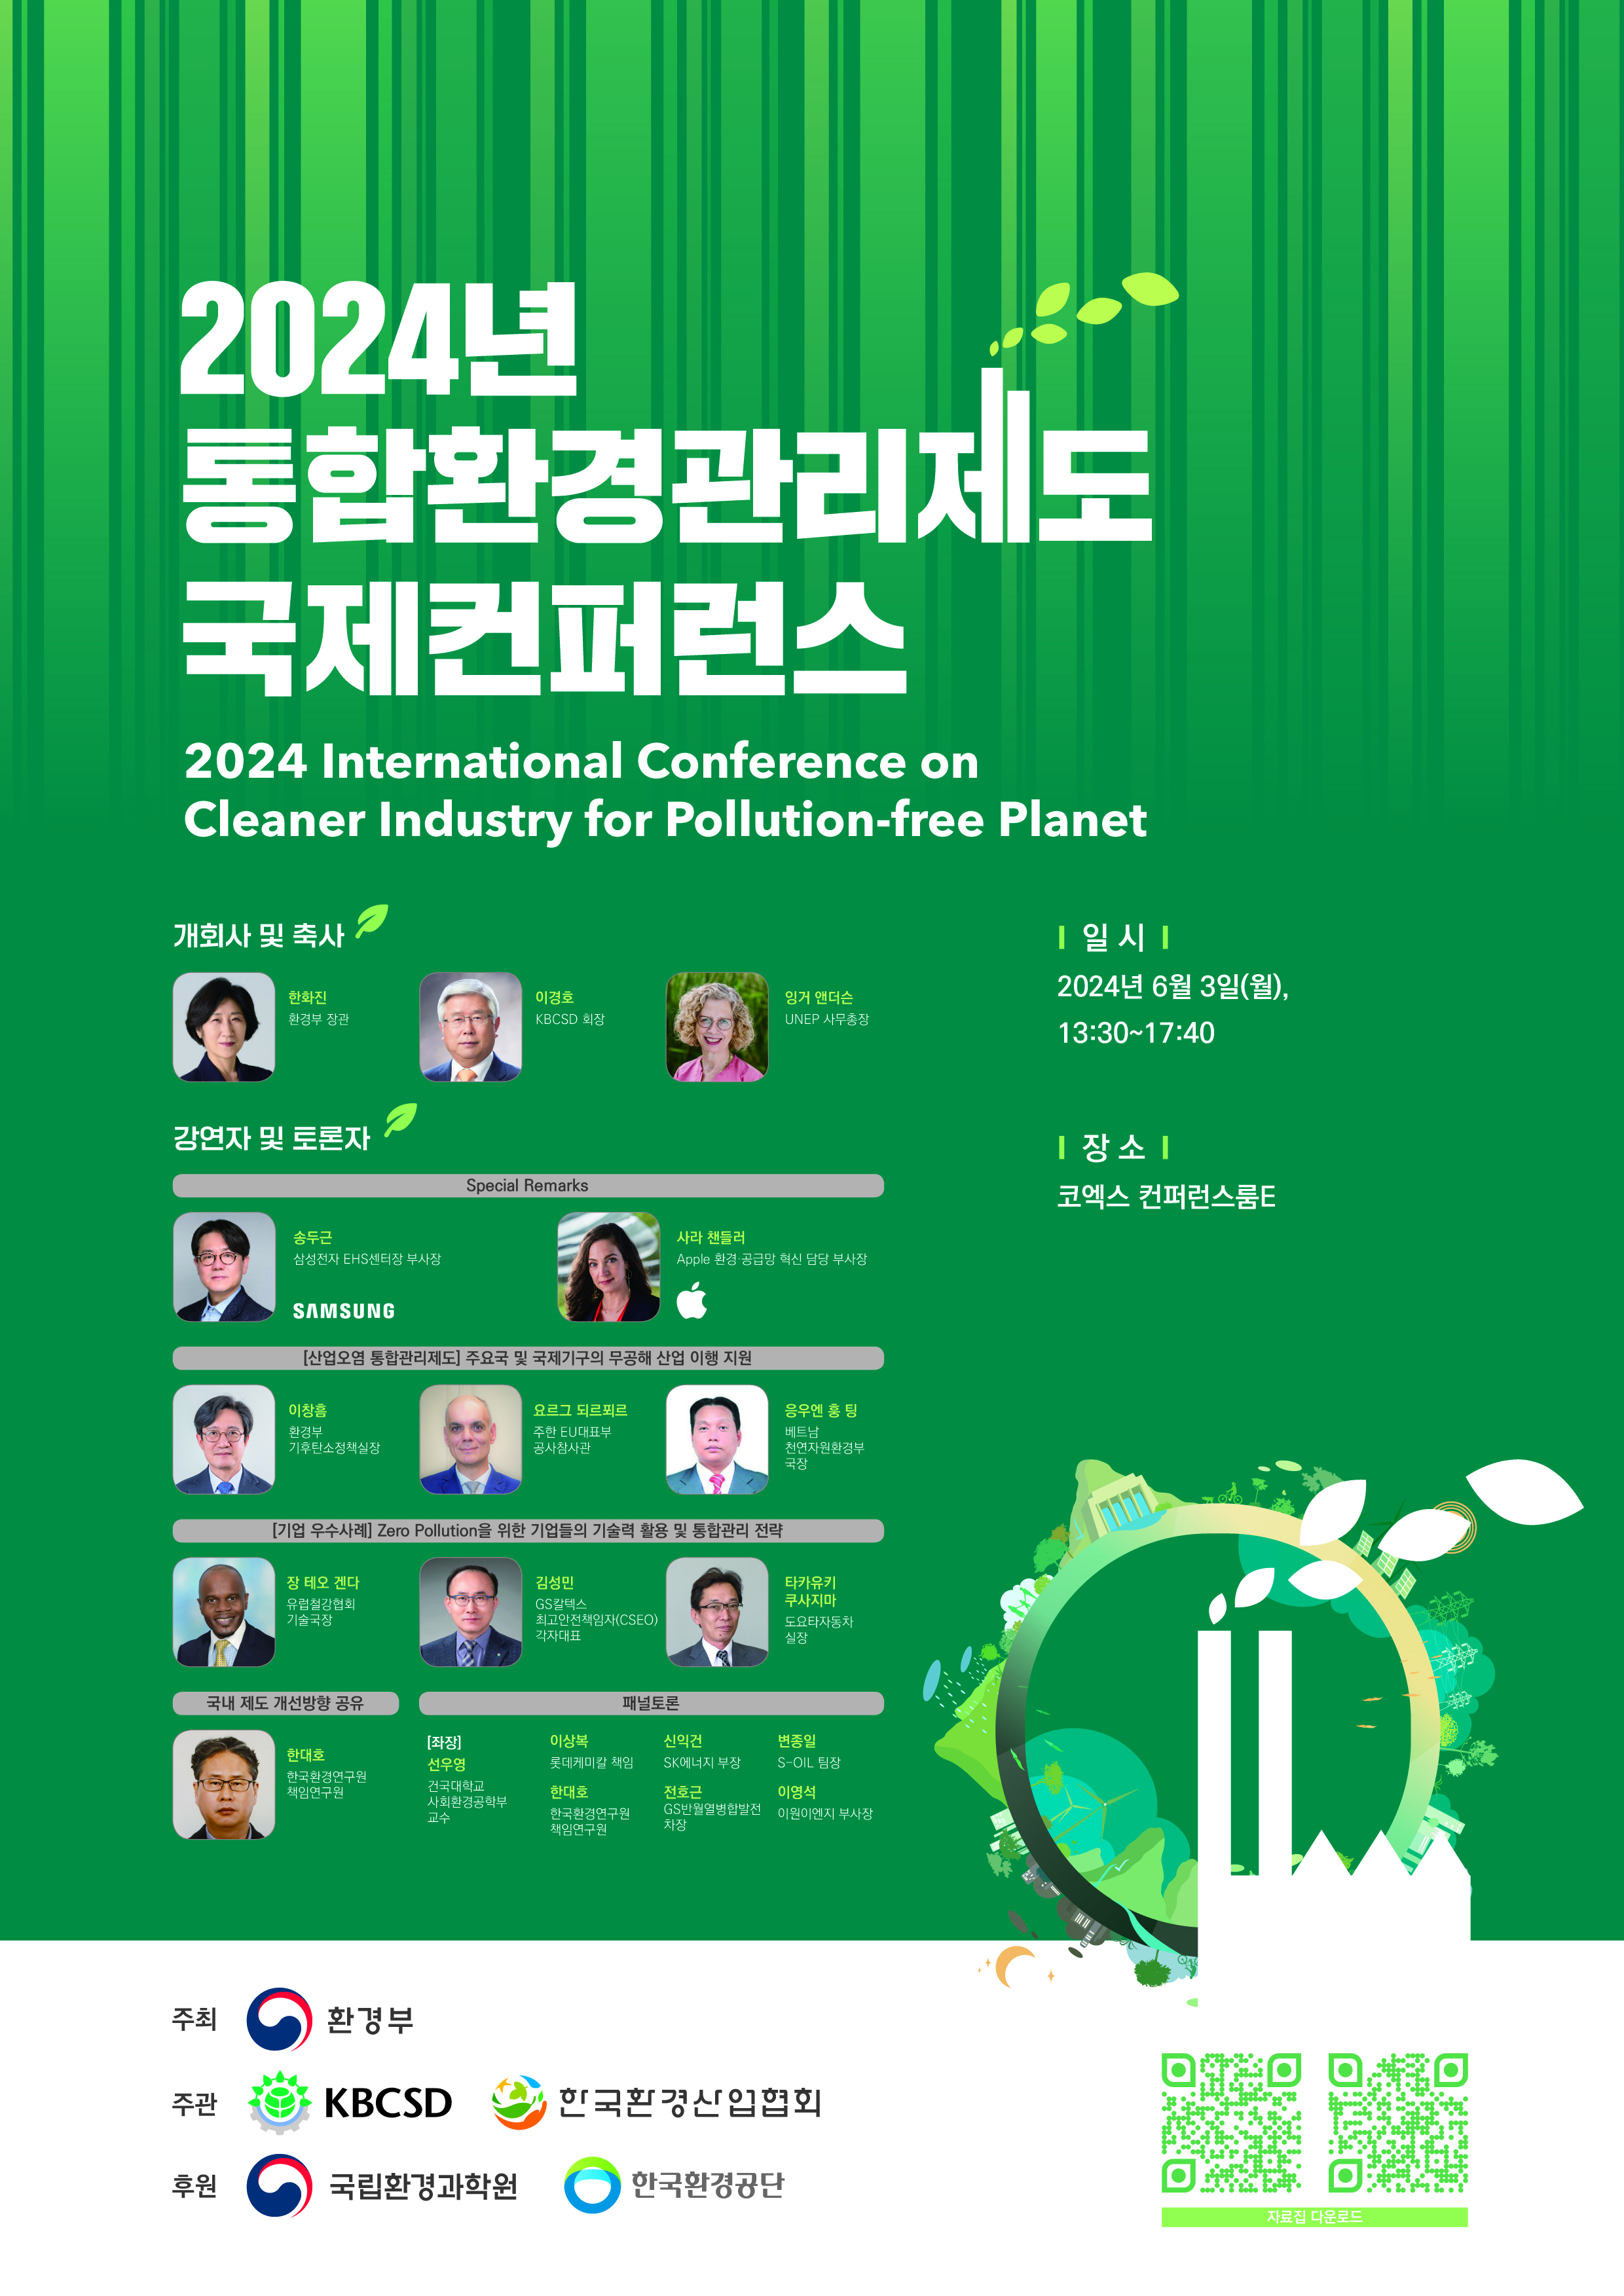 2024년 통합환경관리제도 국제컨퍼런스 2024 International Conference on Cleaner Industry for Pollution-free Planet 개회사 및 축사 한화진 환경부 장관 이경호 KBCSD 회장 잉거 앤더슨 UNEP 사무총장 강연자 및 토론자 Special Remarks 송두근 삼성전자 EHS센터장 부사장 SAMSUNG 사라 챈들러 Apple 환경·공급망 혁신 담당 부사장 [산업오염 통합관리제도] 주요국 및 국제기구의 무공해 산업 이행 지원 이창흠 환경부 기후탄소정책실장 요르그 되르푀르 주한 EU대표부 공사참사관 응우엔 훙 팅 베트남 천연자원환경부 국장 [기업 우수사례] Zero Pollution을 위한 기업들의 기술력 활용 및 통합관리 전략 장 테오 겐다 유럽철강협회 기술국장 김성민 GS칼텍스 최고안전책임자(CSEO) 각자대표 타카유키 쿠사지마 도요타자동차 실장 국내 제도 개선방향 공유 한대호 한국환경연구원 책임연구원 패널토론 [좌장] 선우영 건국대학교 사회환경공학부 교수 이상복 롯데케미칼 책임 한대호 한국환경연구원 책임연구원 신익건 SK에너지 부장 전호근 GS반월열병합발전 차장 변종일 S-OIL 팀장 이영석 이원이엔지 부사장 일 시 2024년 6월 3일(월), 13:30~17:40 장소 코엑스 컨퍼런스룸E 주최 환경부 주관 KBCSD 한국환경산업협회 후원 국립환경과학원 한국환경공단 자료집 다운로드